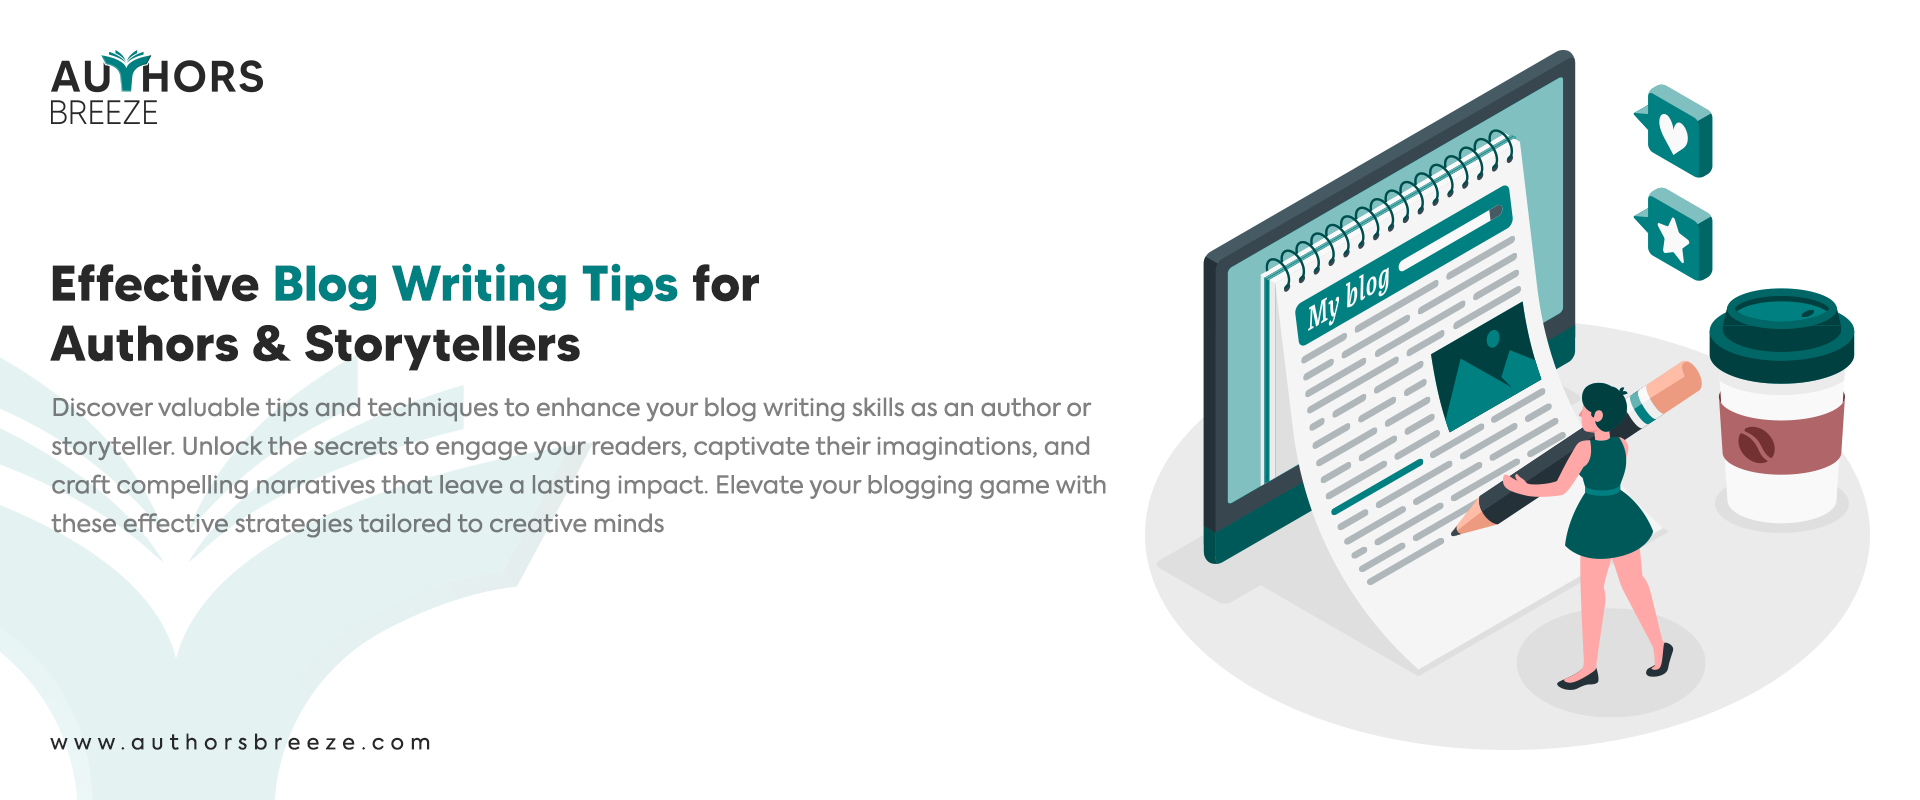 Blog Writing Tips